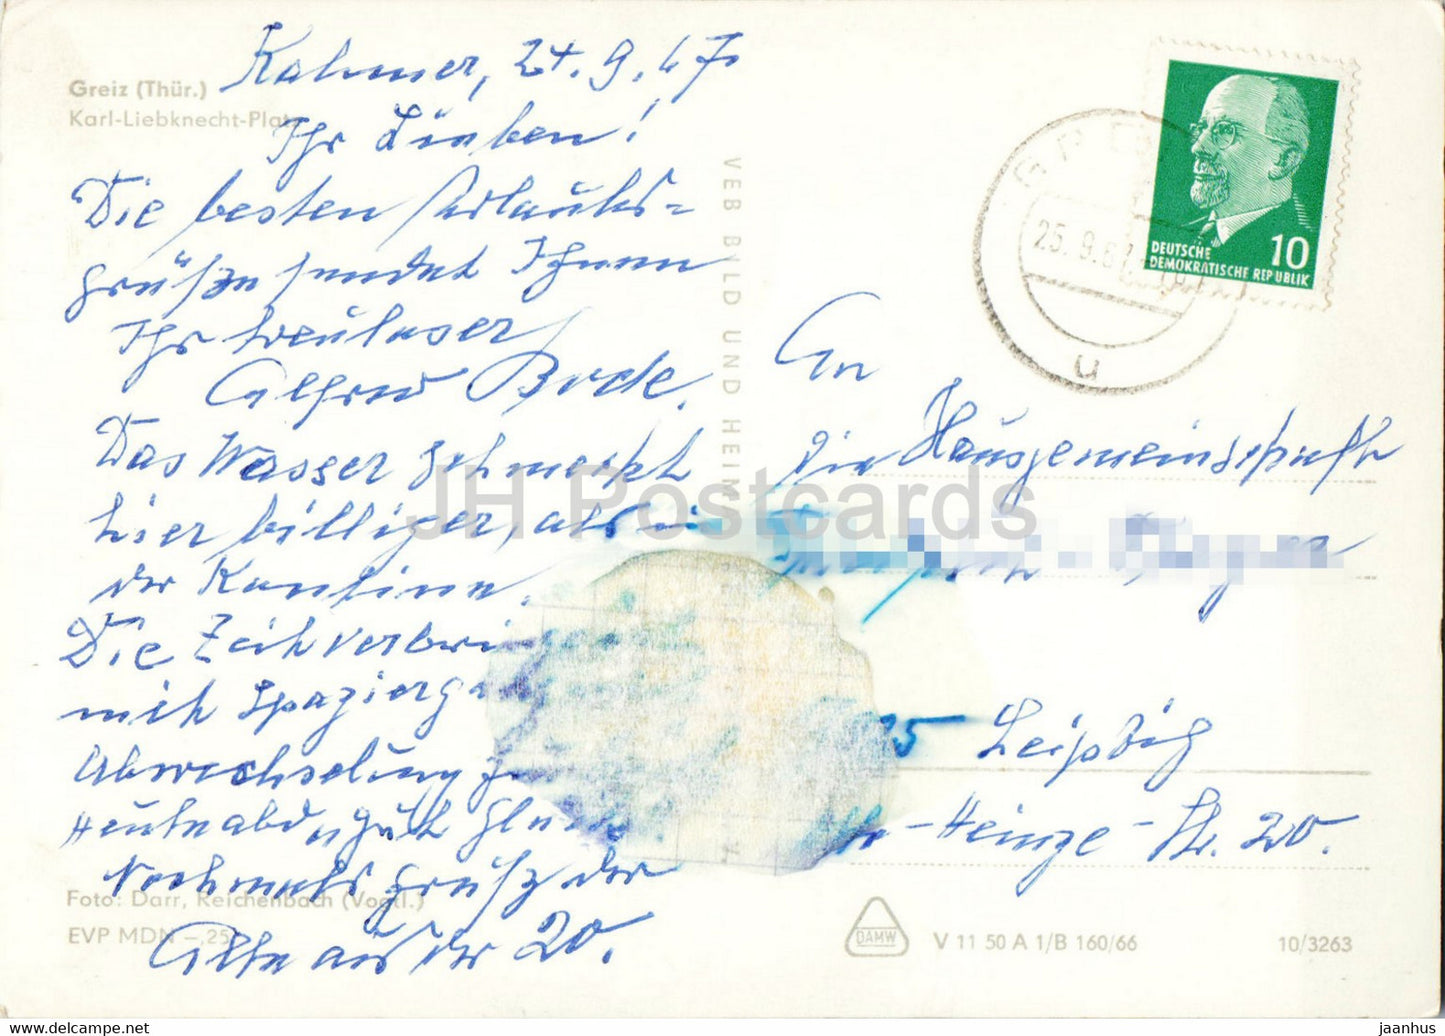 Greiz - Karl Liebknecht Platz - old postcard - 1967 - Germany DDR - used